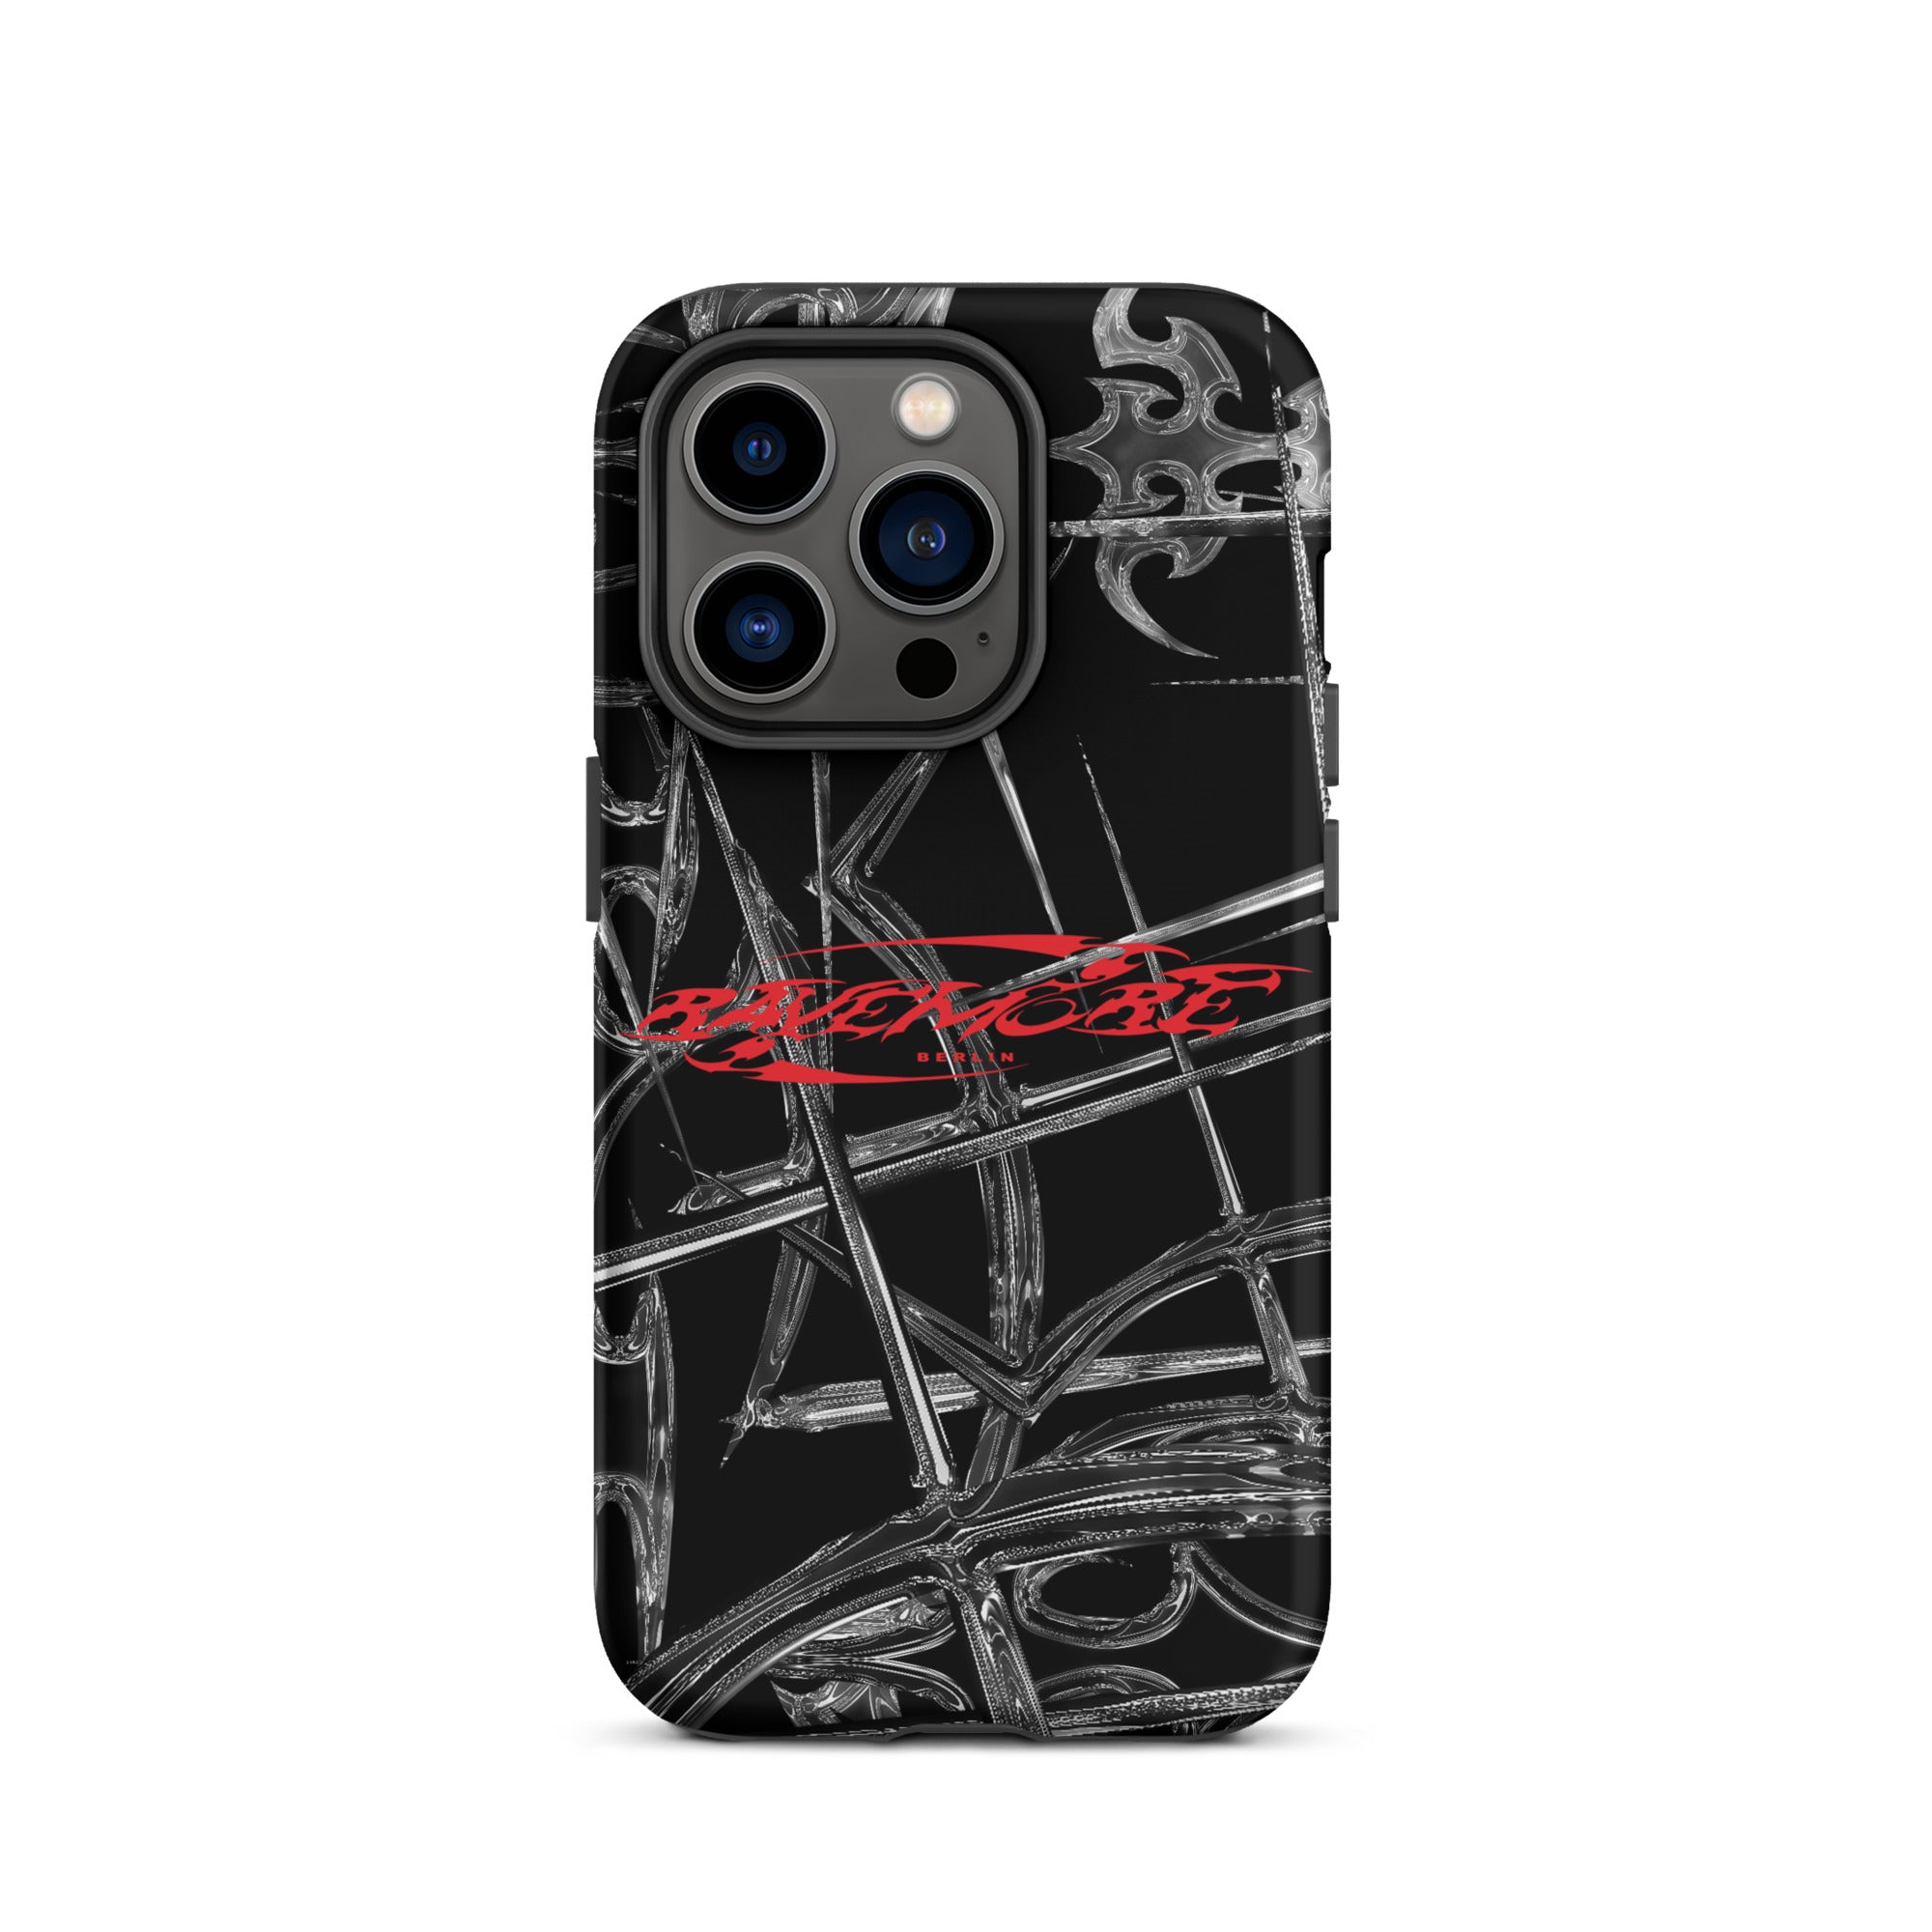 BLADE smartphone case